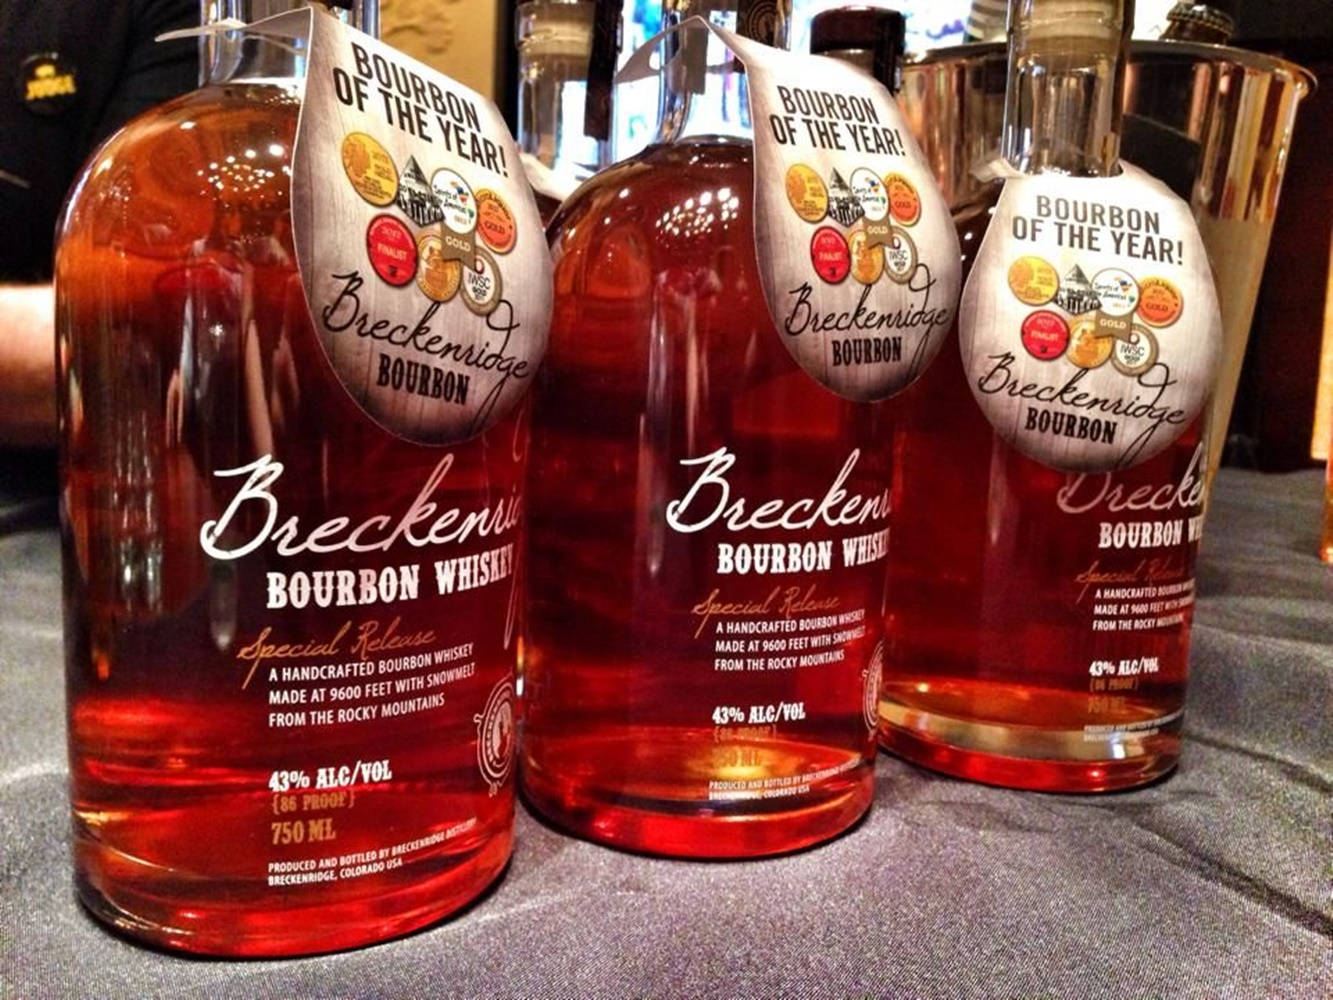 Caption: Award-winning Breckenridge Distillery bourbon bottle showcased against a stunning backdrop. Wallpaper